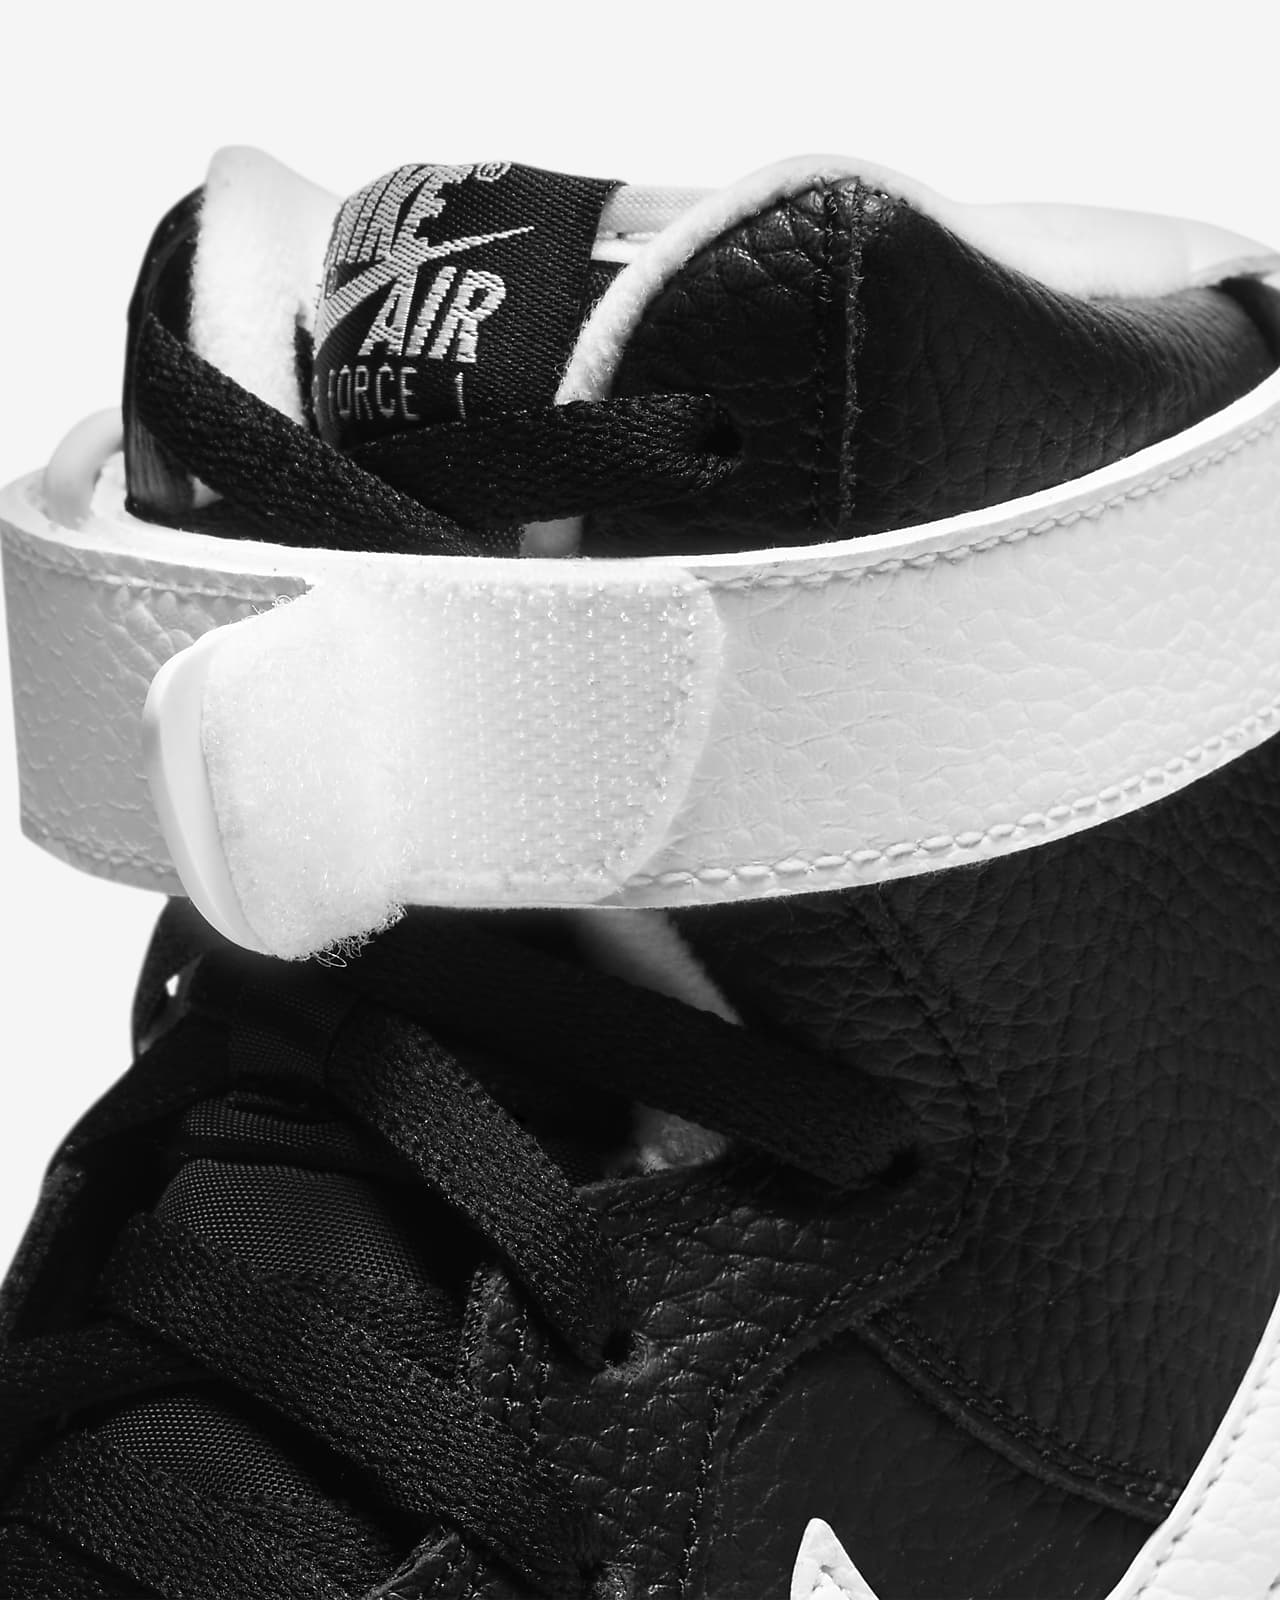 Box Fresh- Black Nike Air Force 1's 07.